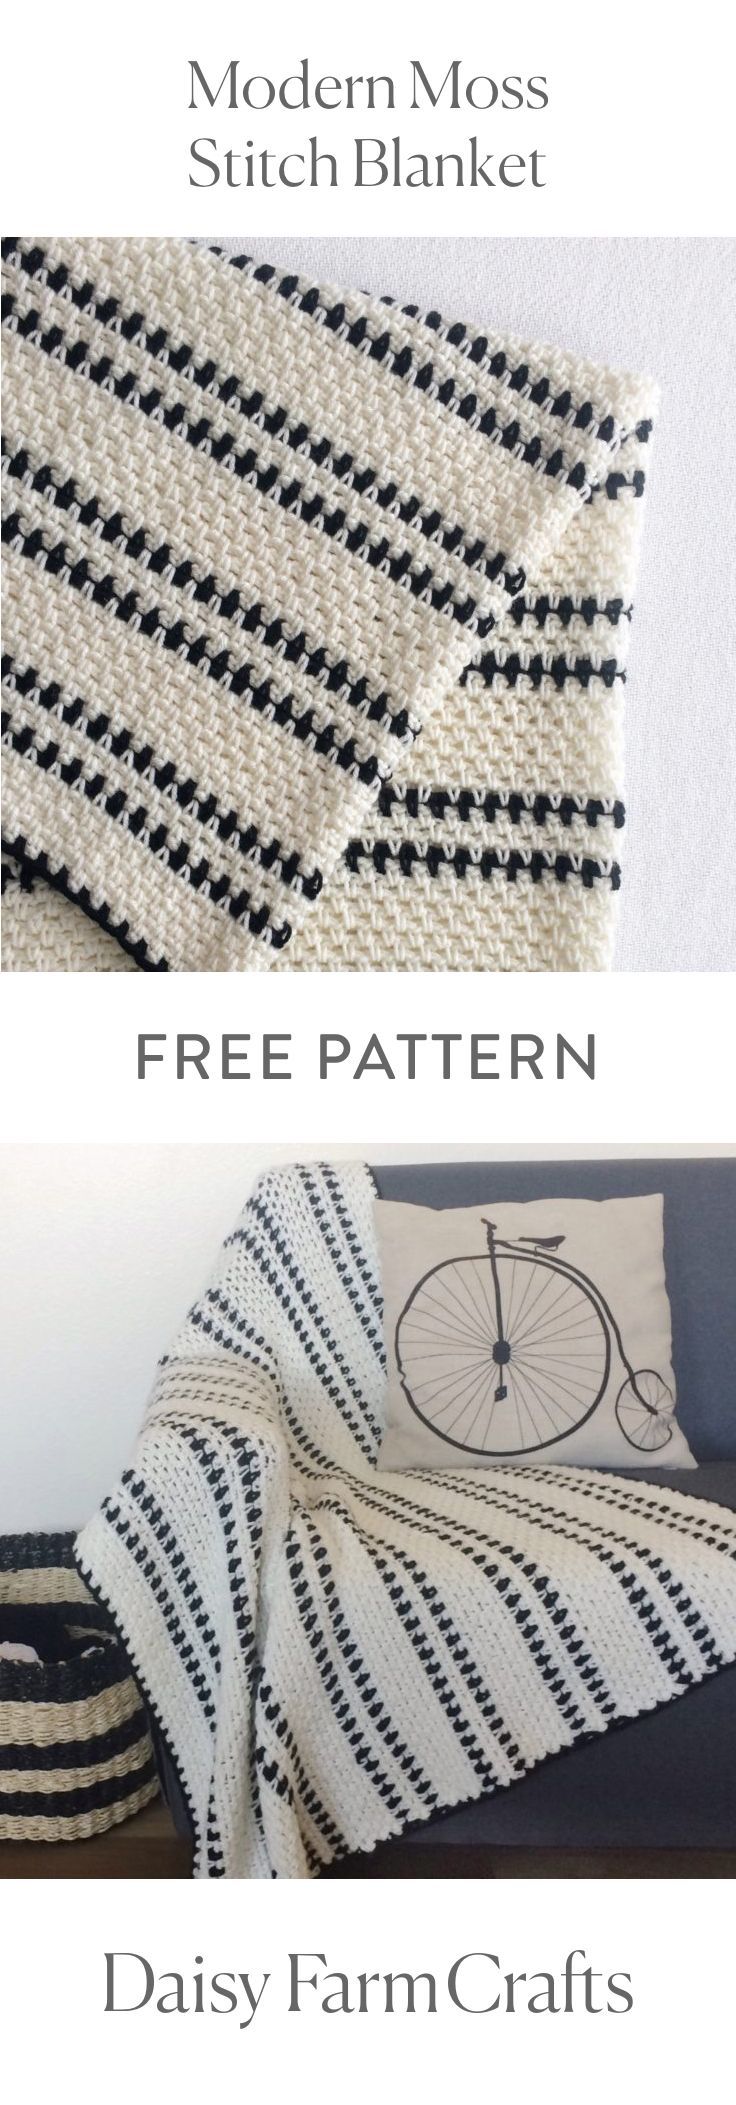 FREE PATTERN Crochet Modern Moss Stitch Blanket by Daisy Farm Crafts